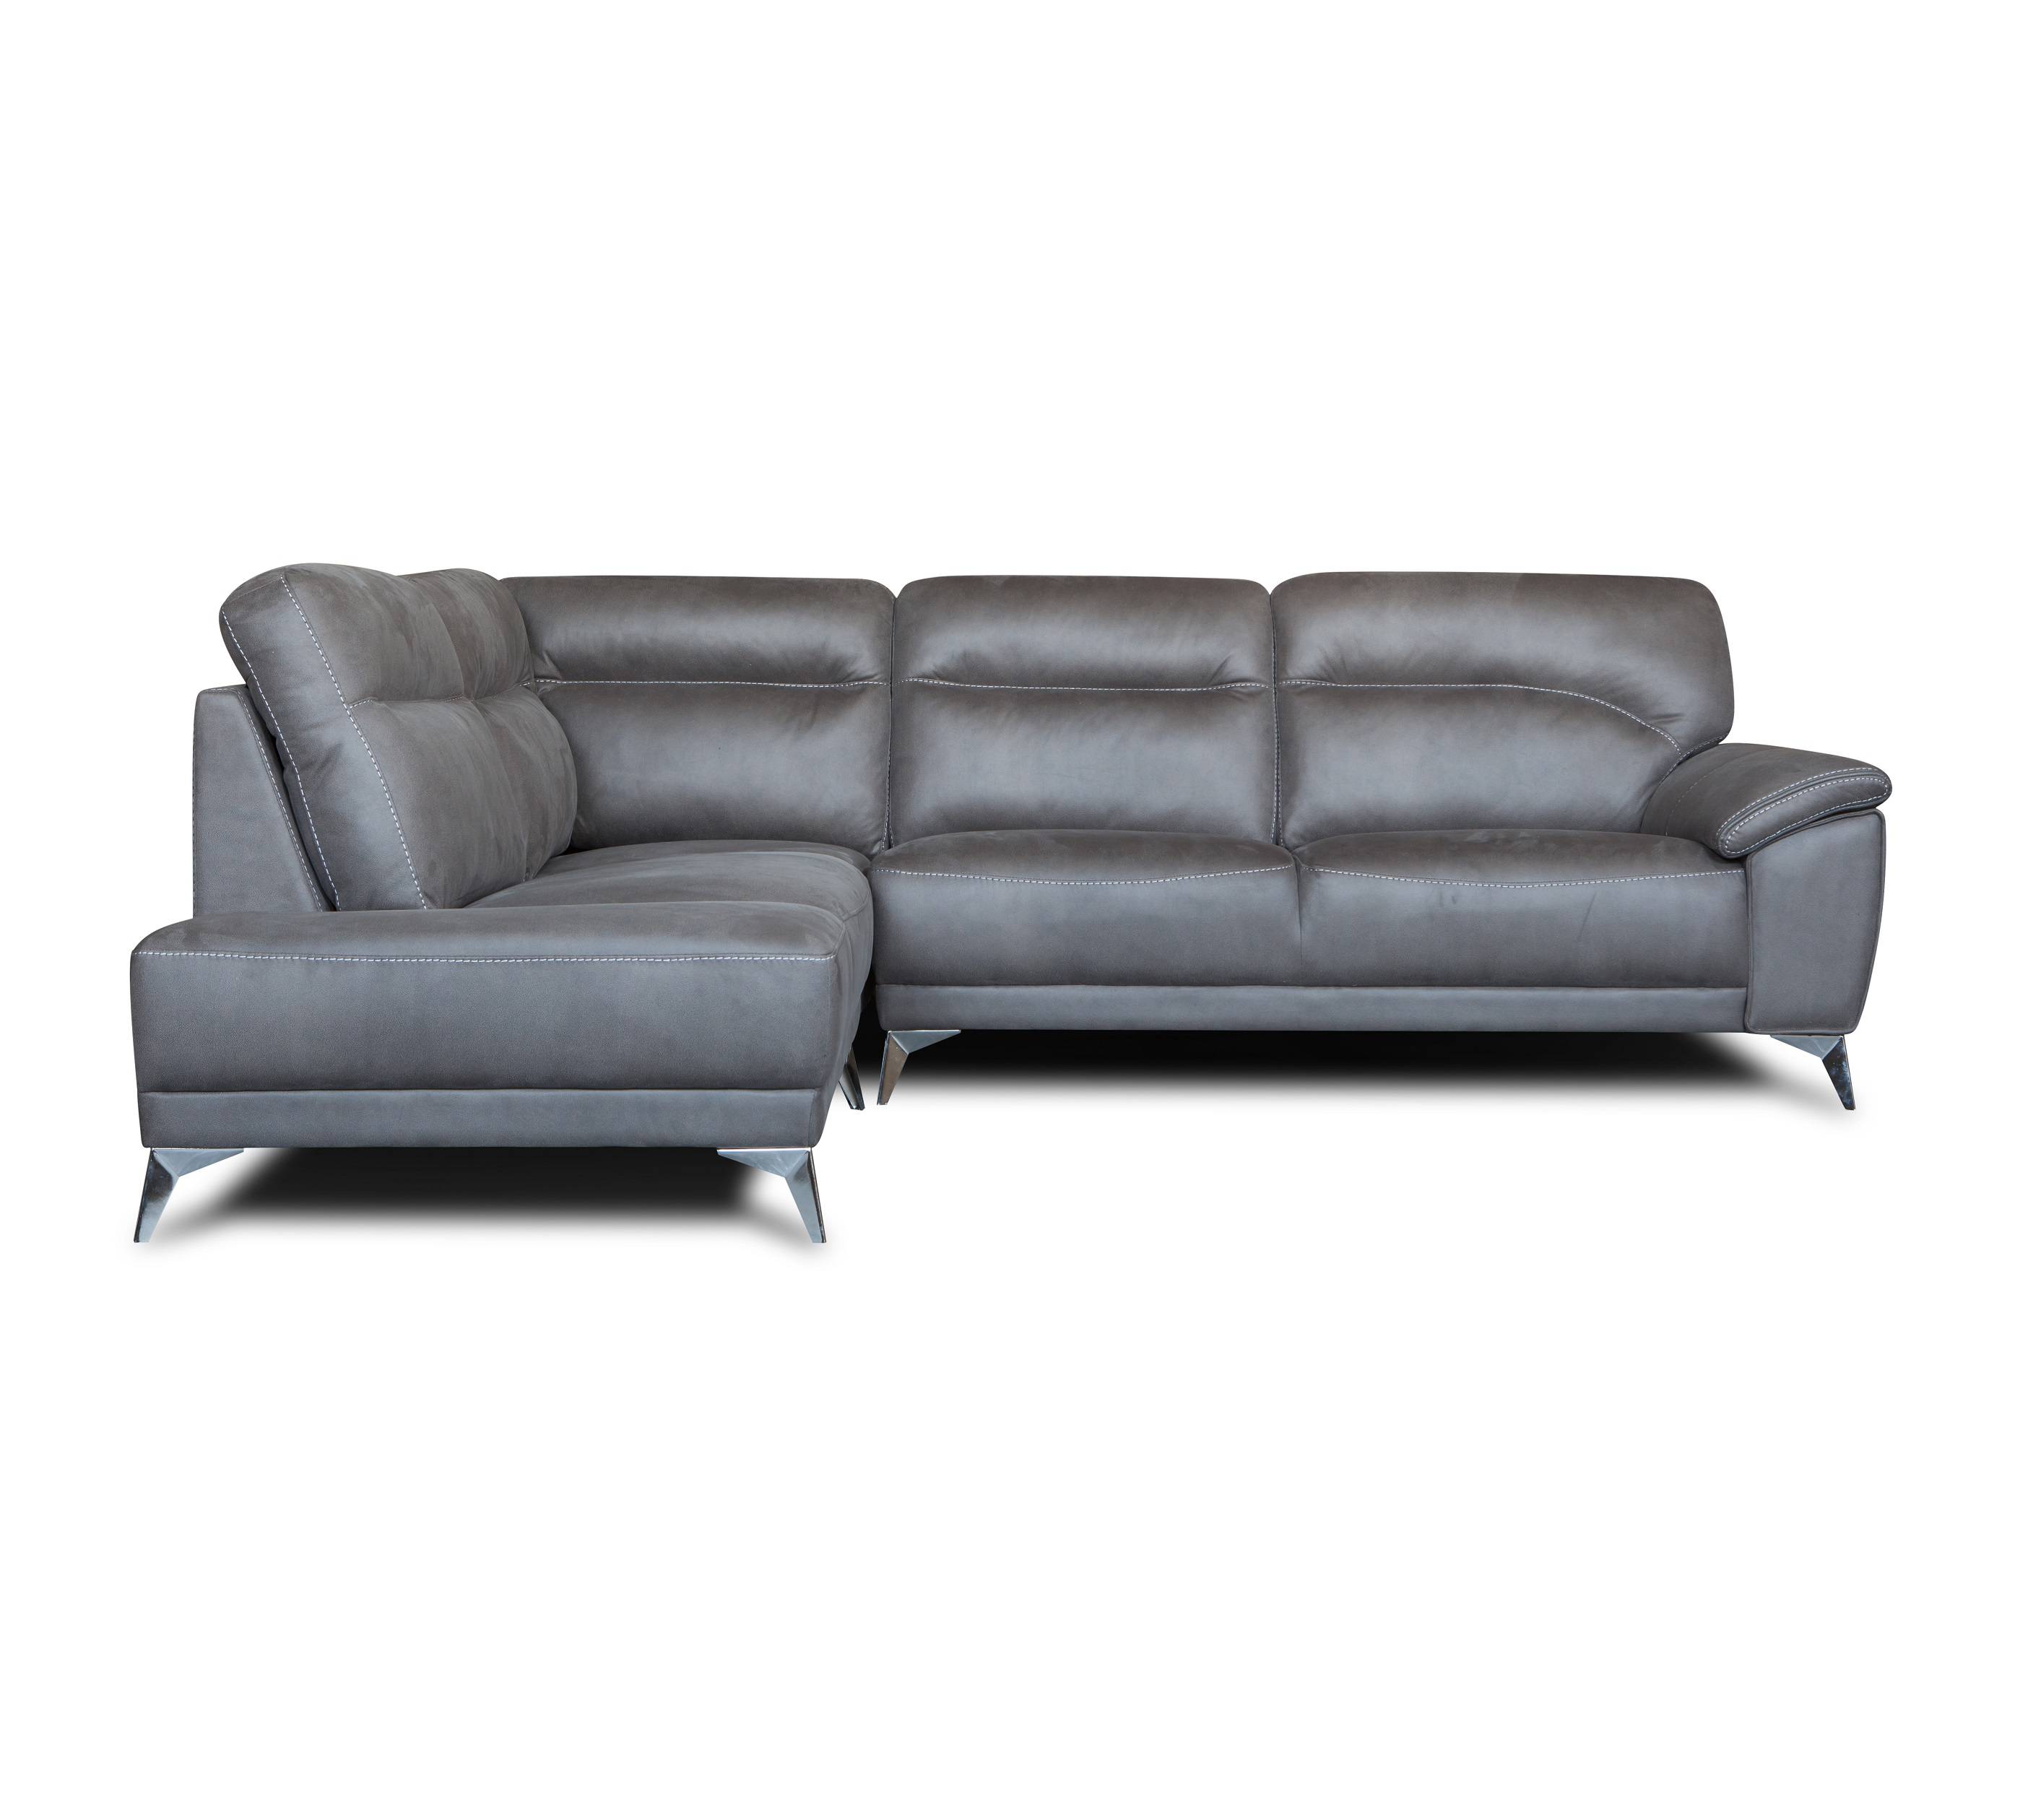 American style 3 2 1 set modern leather furniture corner sofa